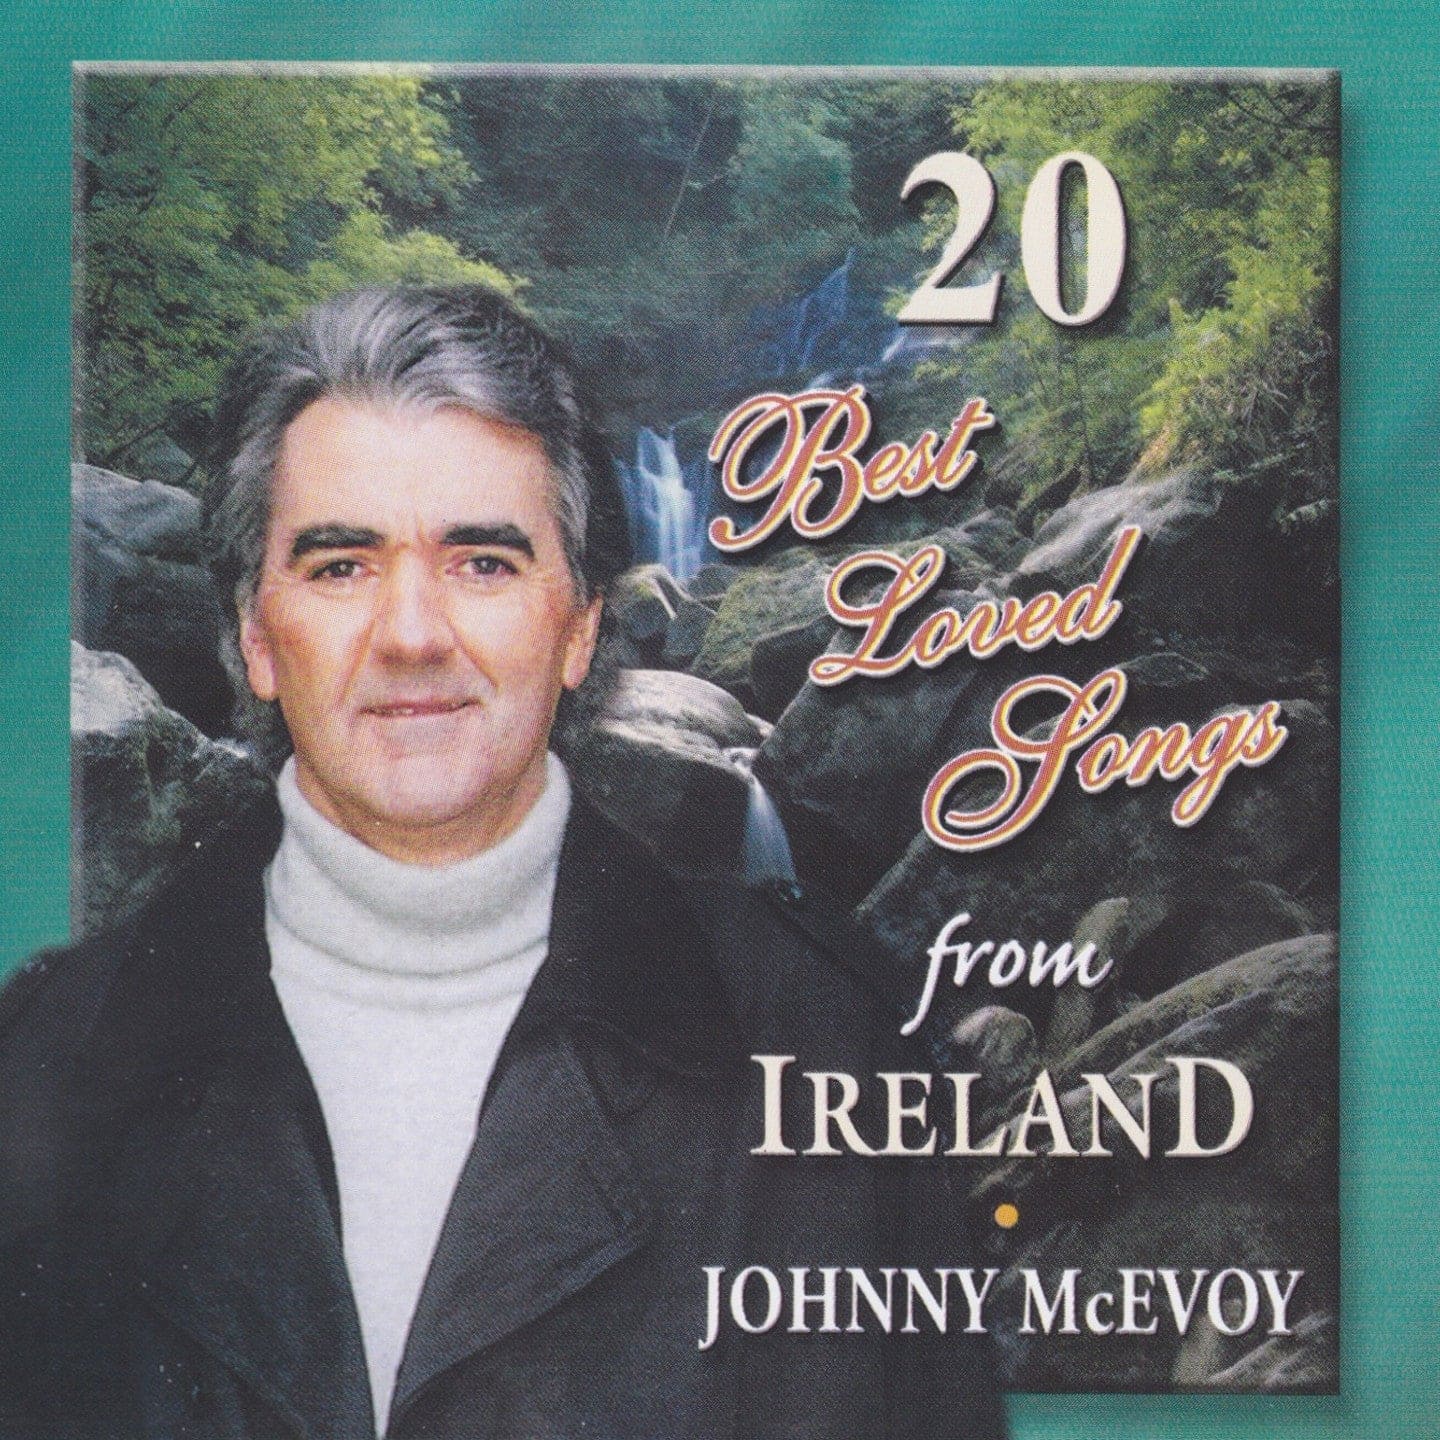 20 Best Loved Irish Songs - Johnny McEvoy [CD]